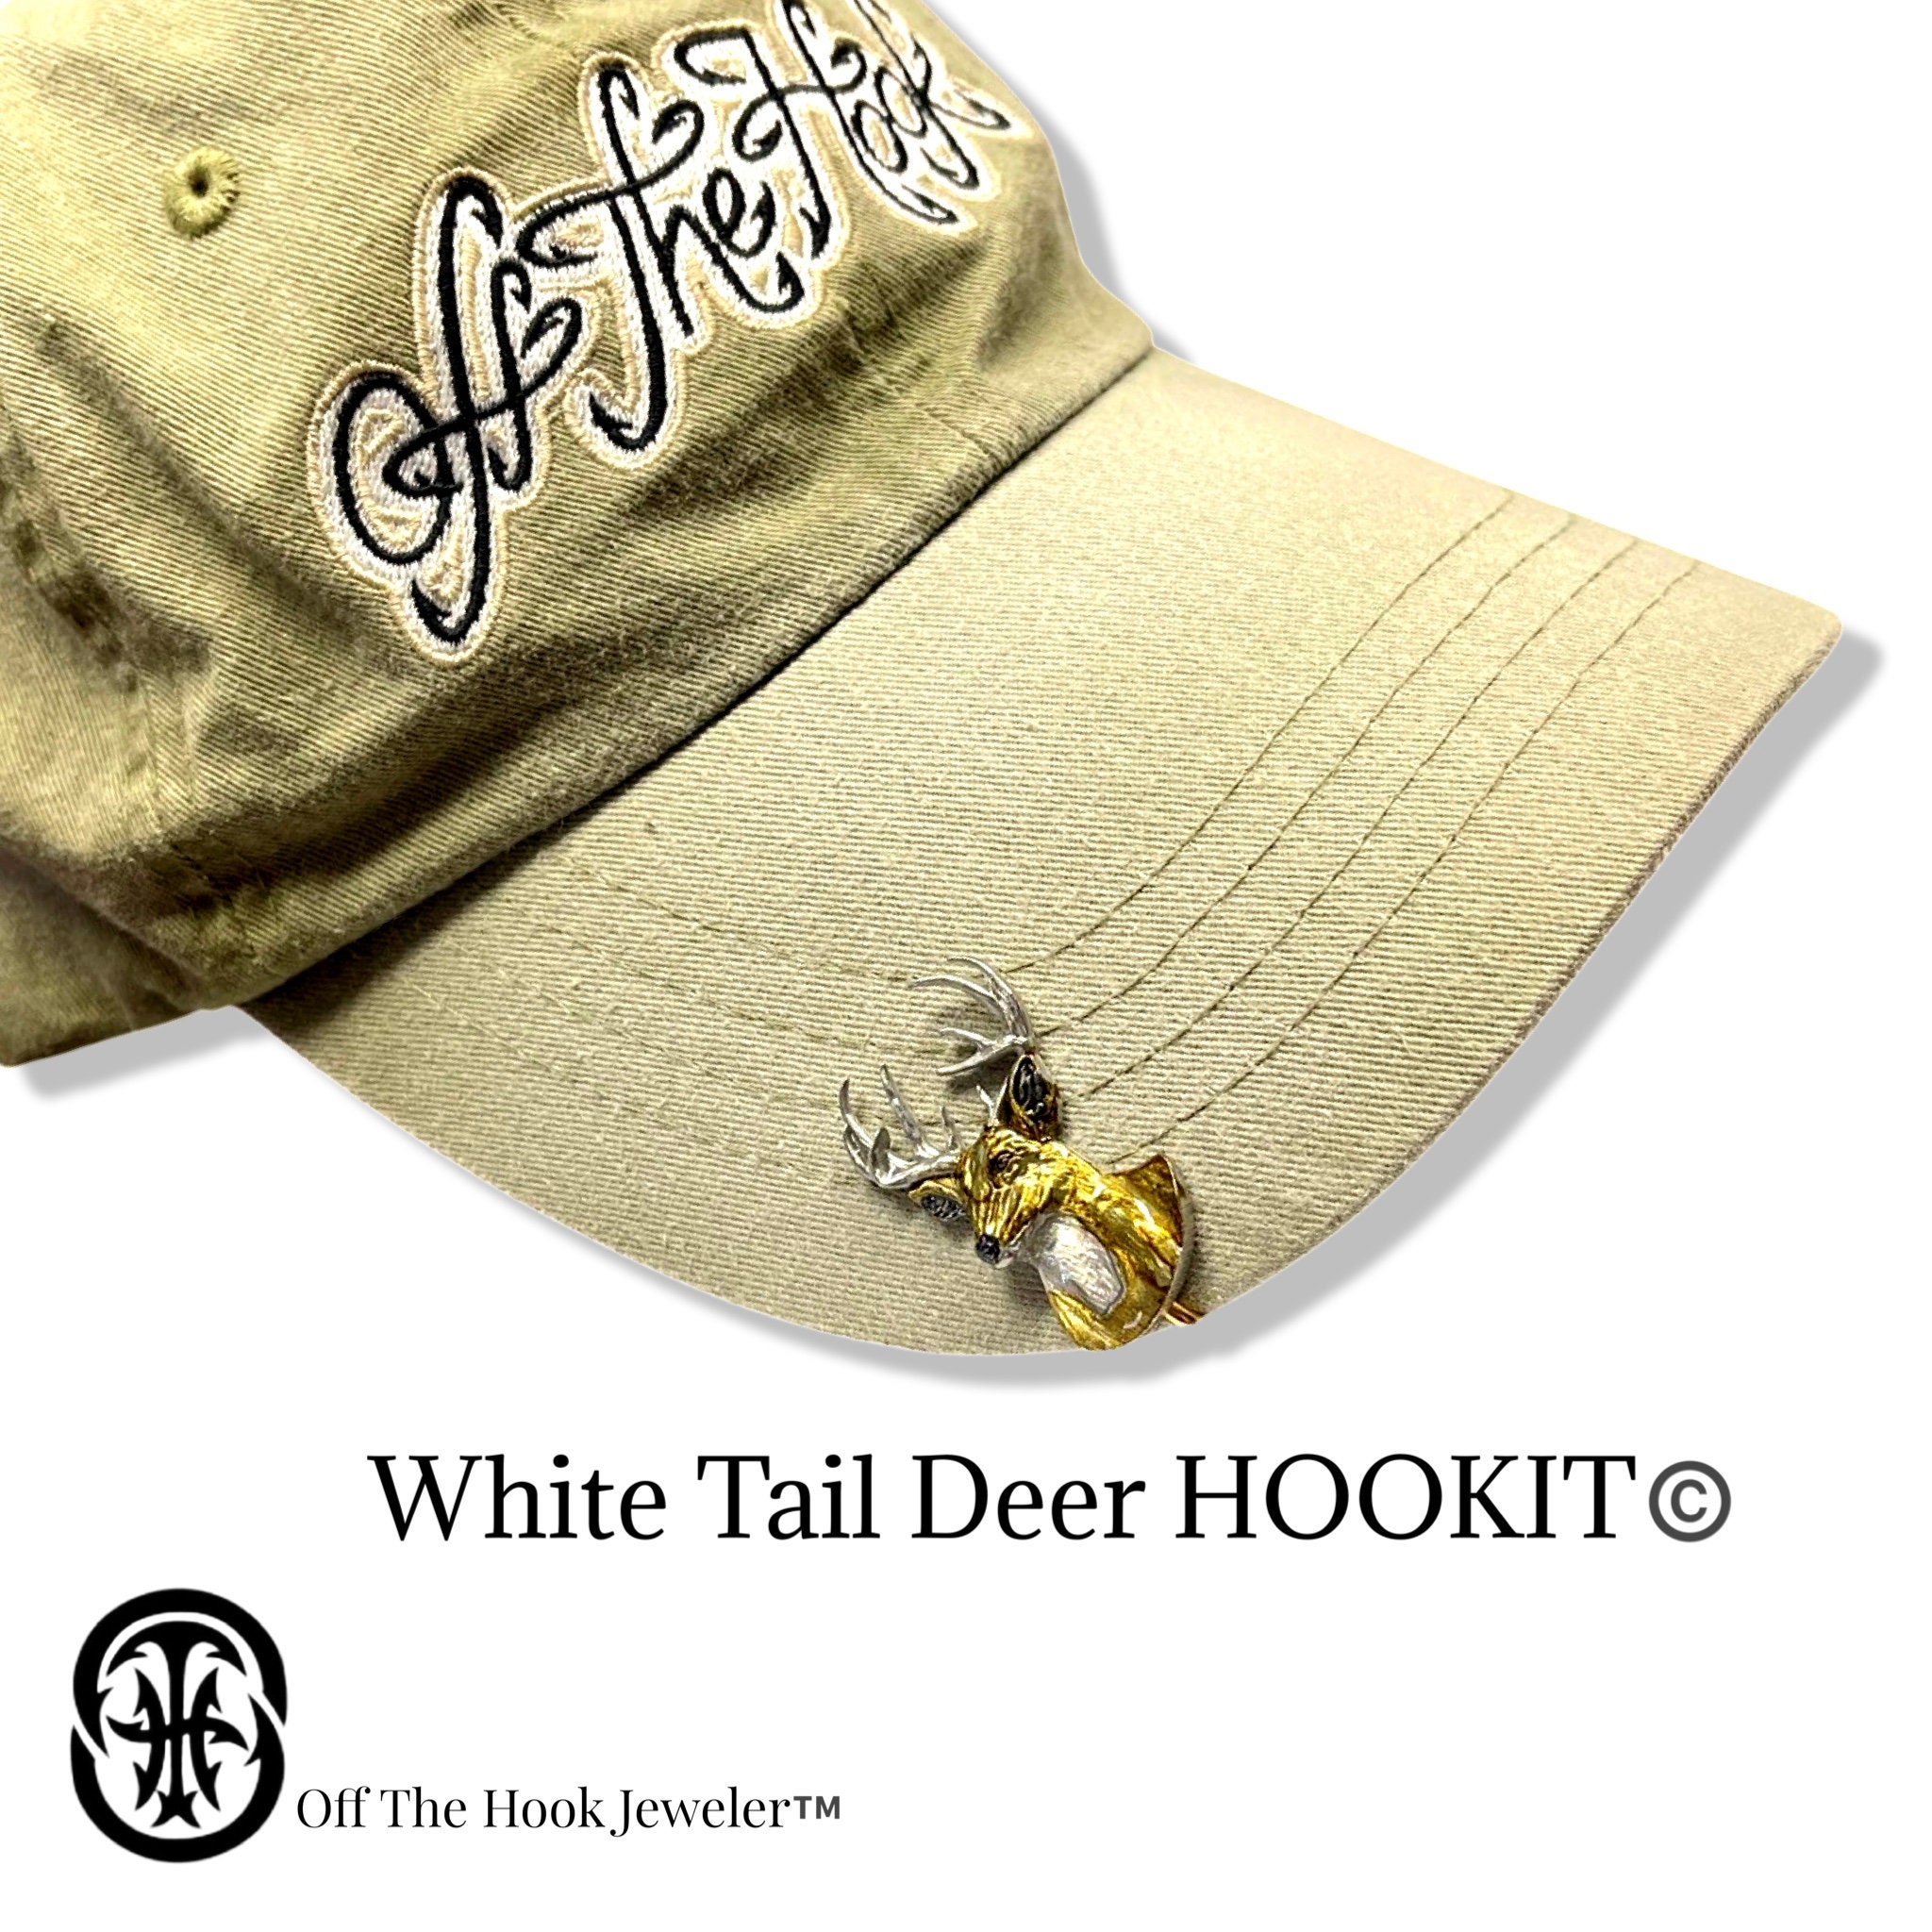 Deer hookit© Hat Clip Brim Clip White Tail Buck Fishing Hat Hook